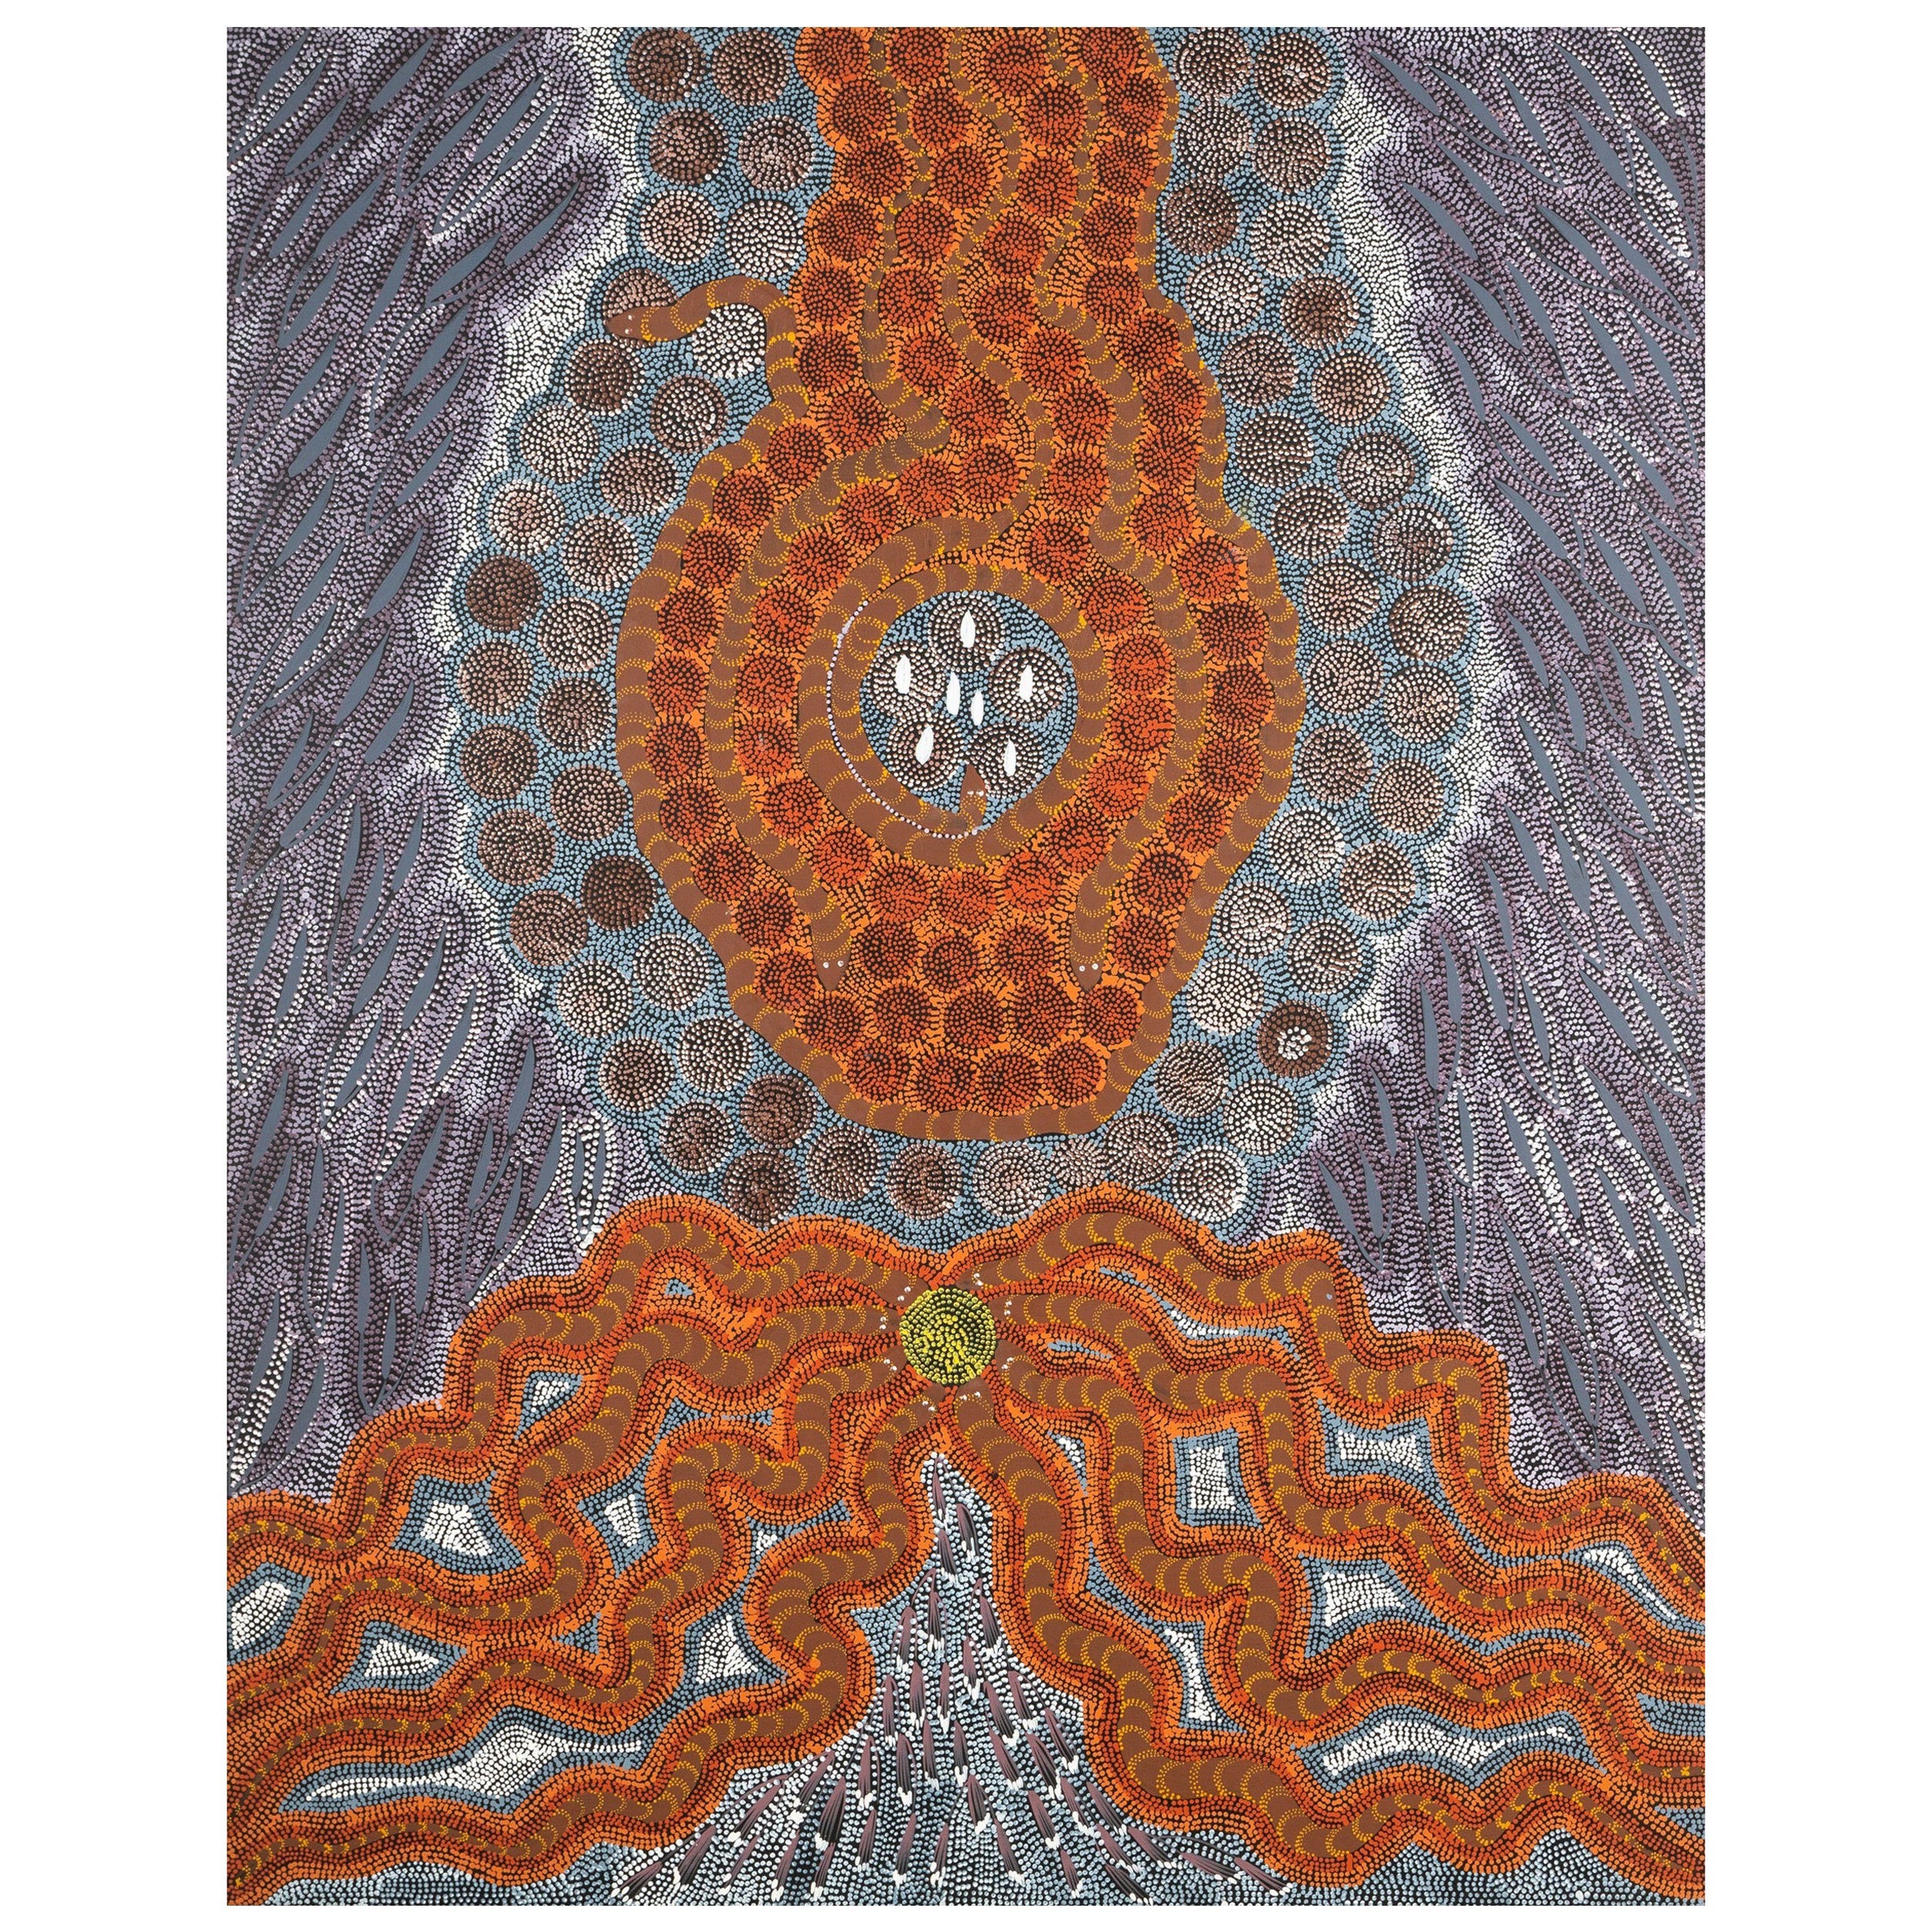 Australian Aboriginal Art Janet Forrester Ngala Painting Snake & Milky Way Dream For Sale